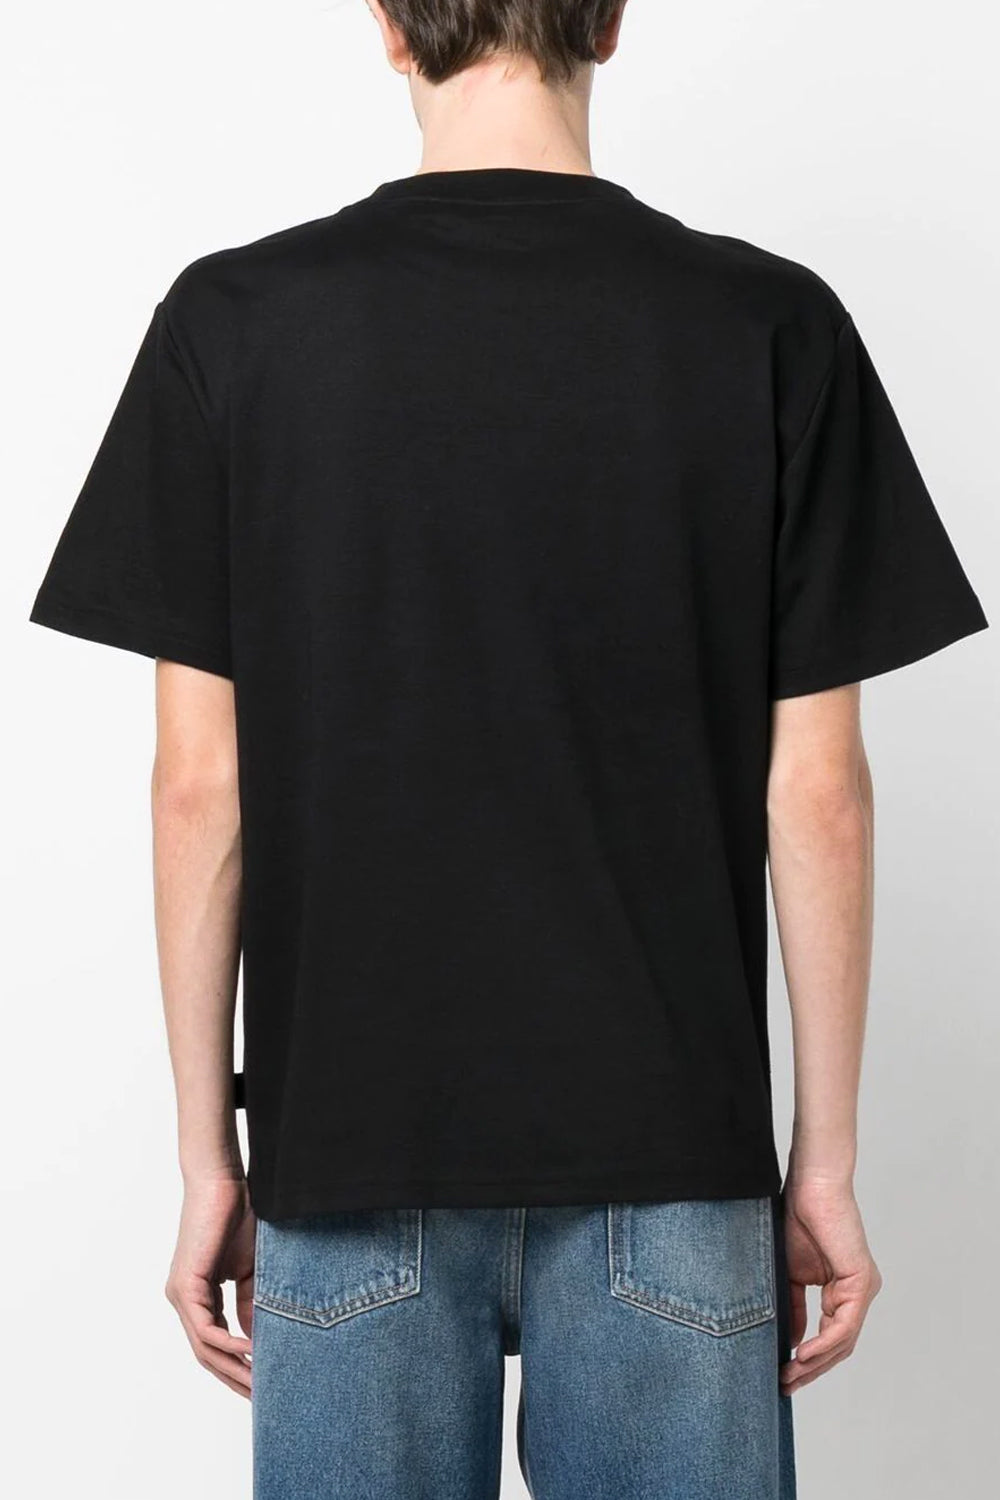 Gcds logo-print short-sleeved T-shirt black